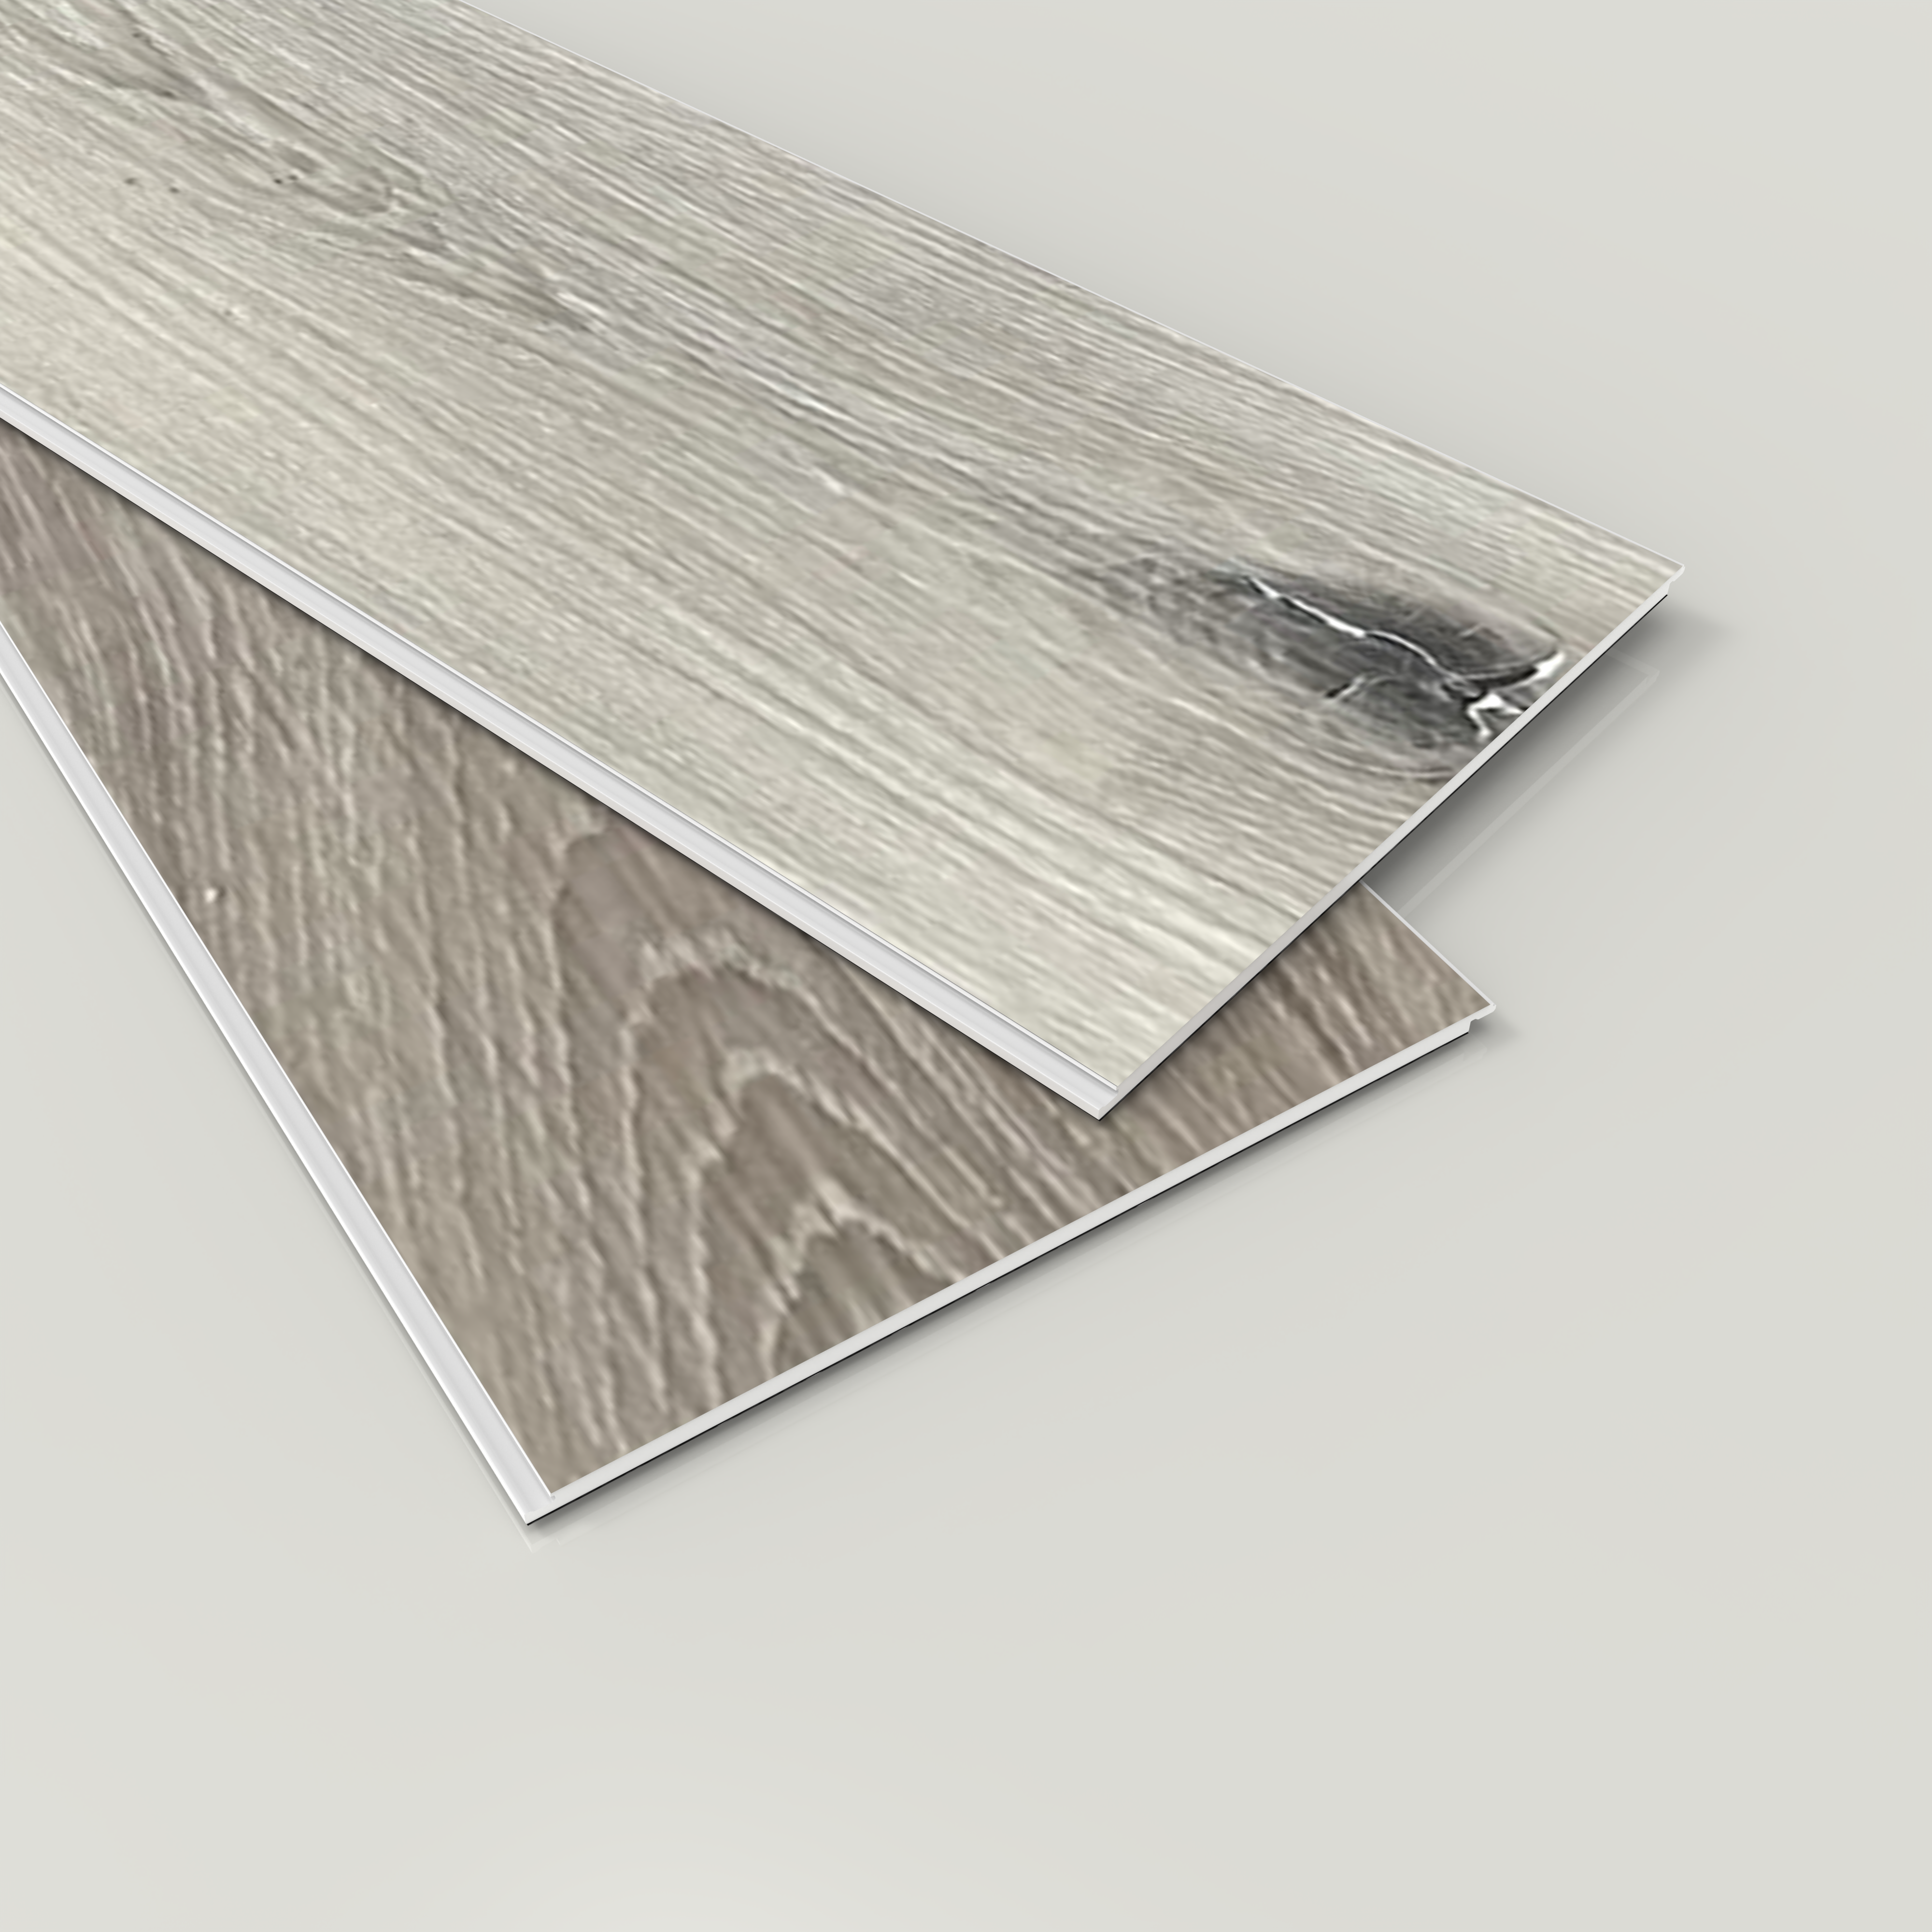 SPC Rigid Core Plank Harbor Flooring, 7" x 48" x 6mm, 22 mil Wear Layer